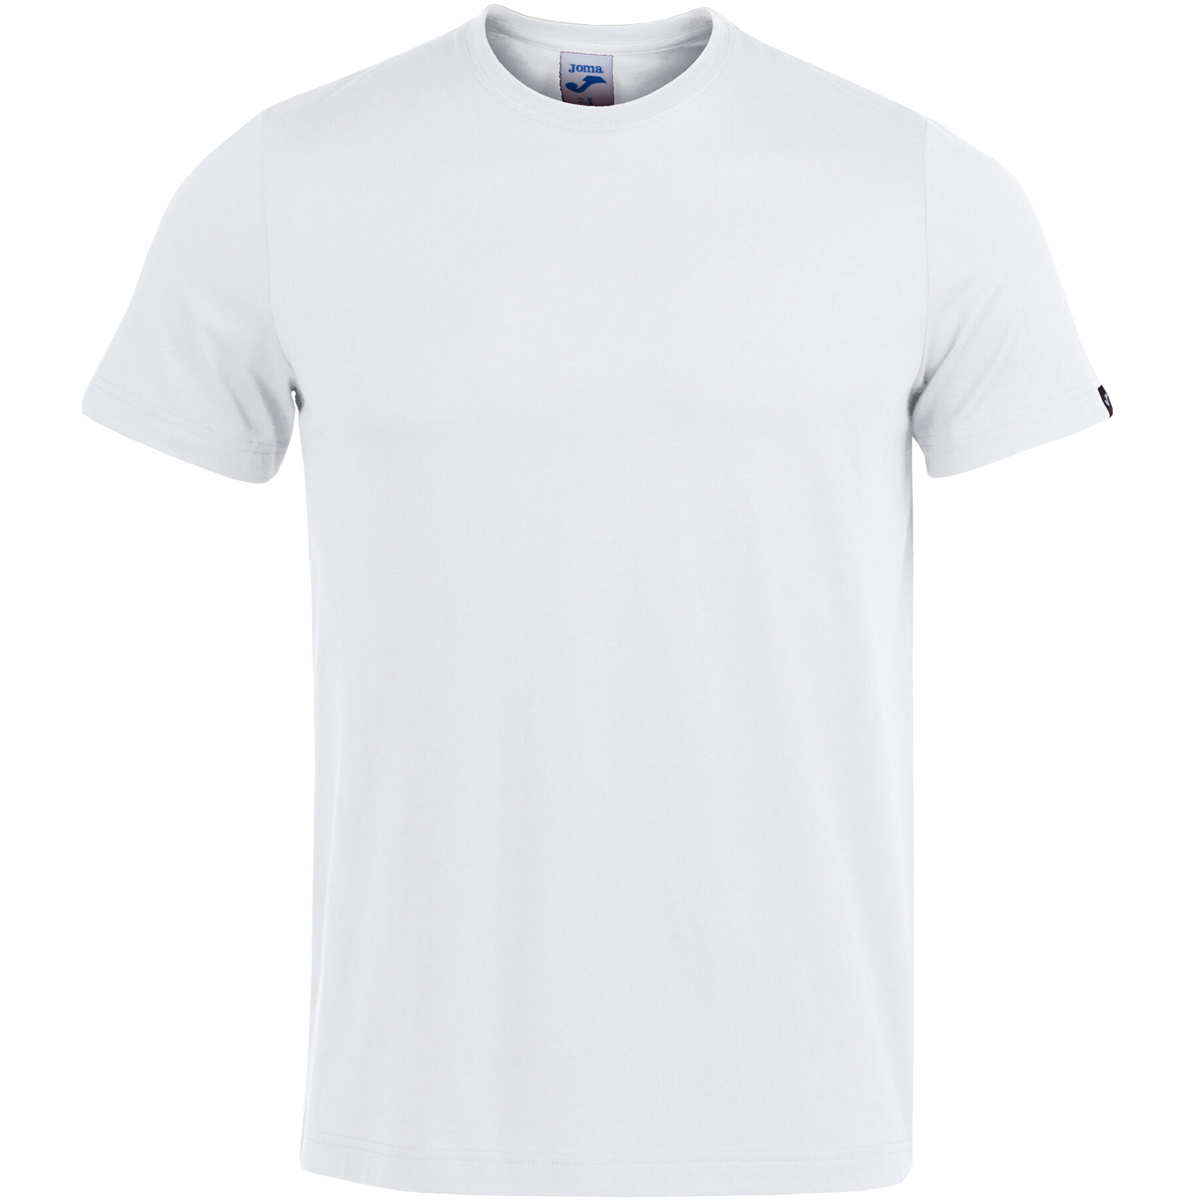 Vêtements Homme Giant Logo T-shirt könsneutral Desert Tee Blanc